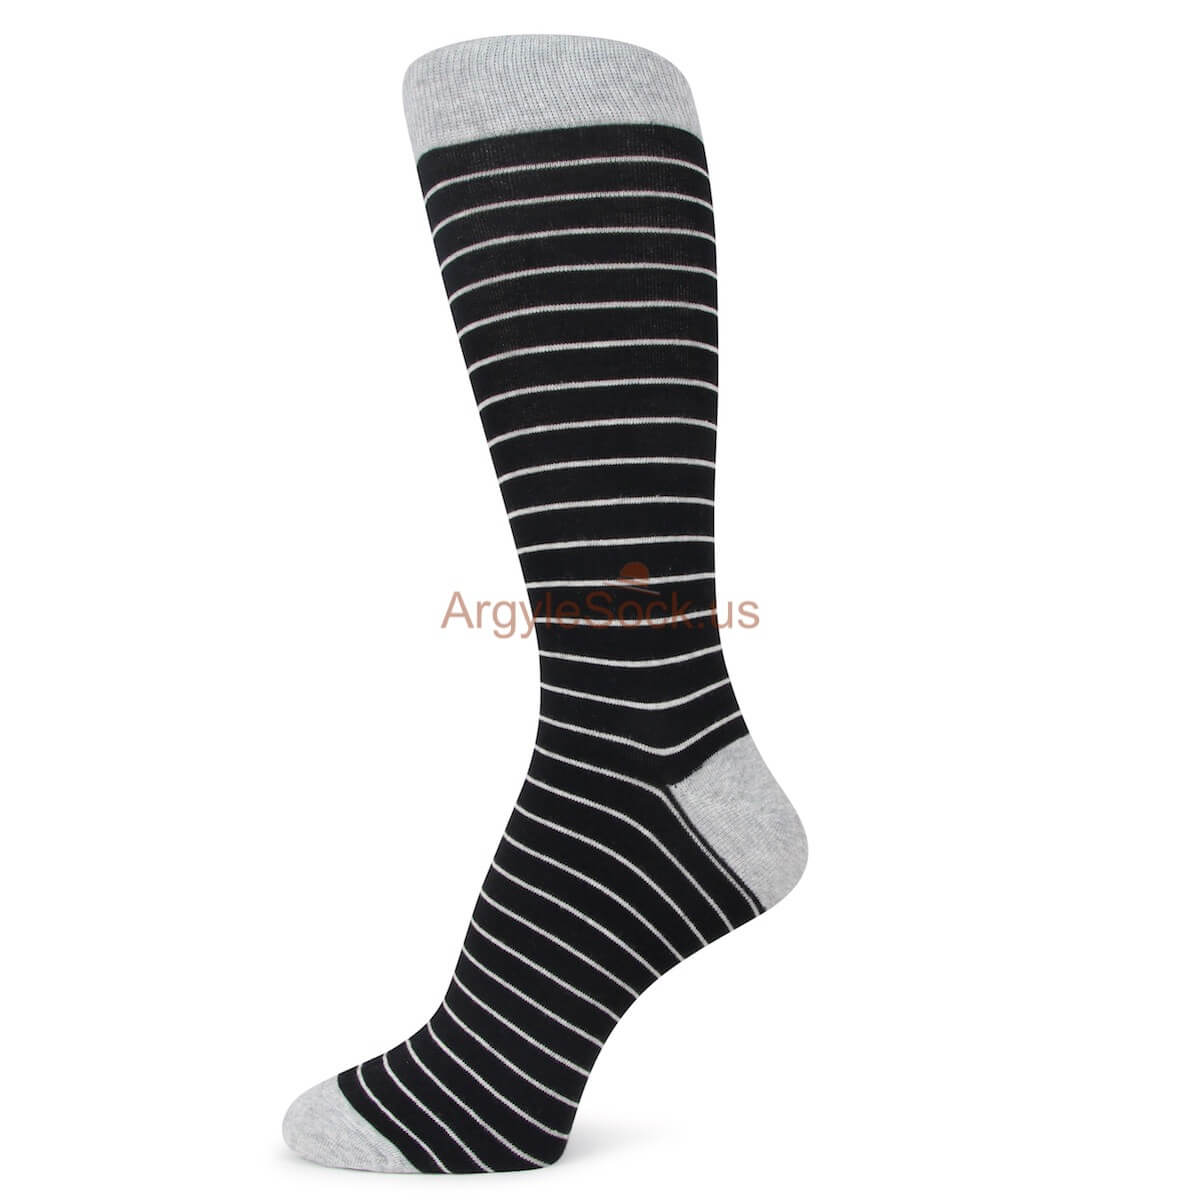 Black with Grey Stripes Themed Socks for Men